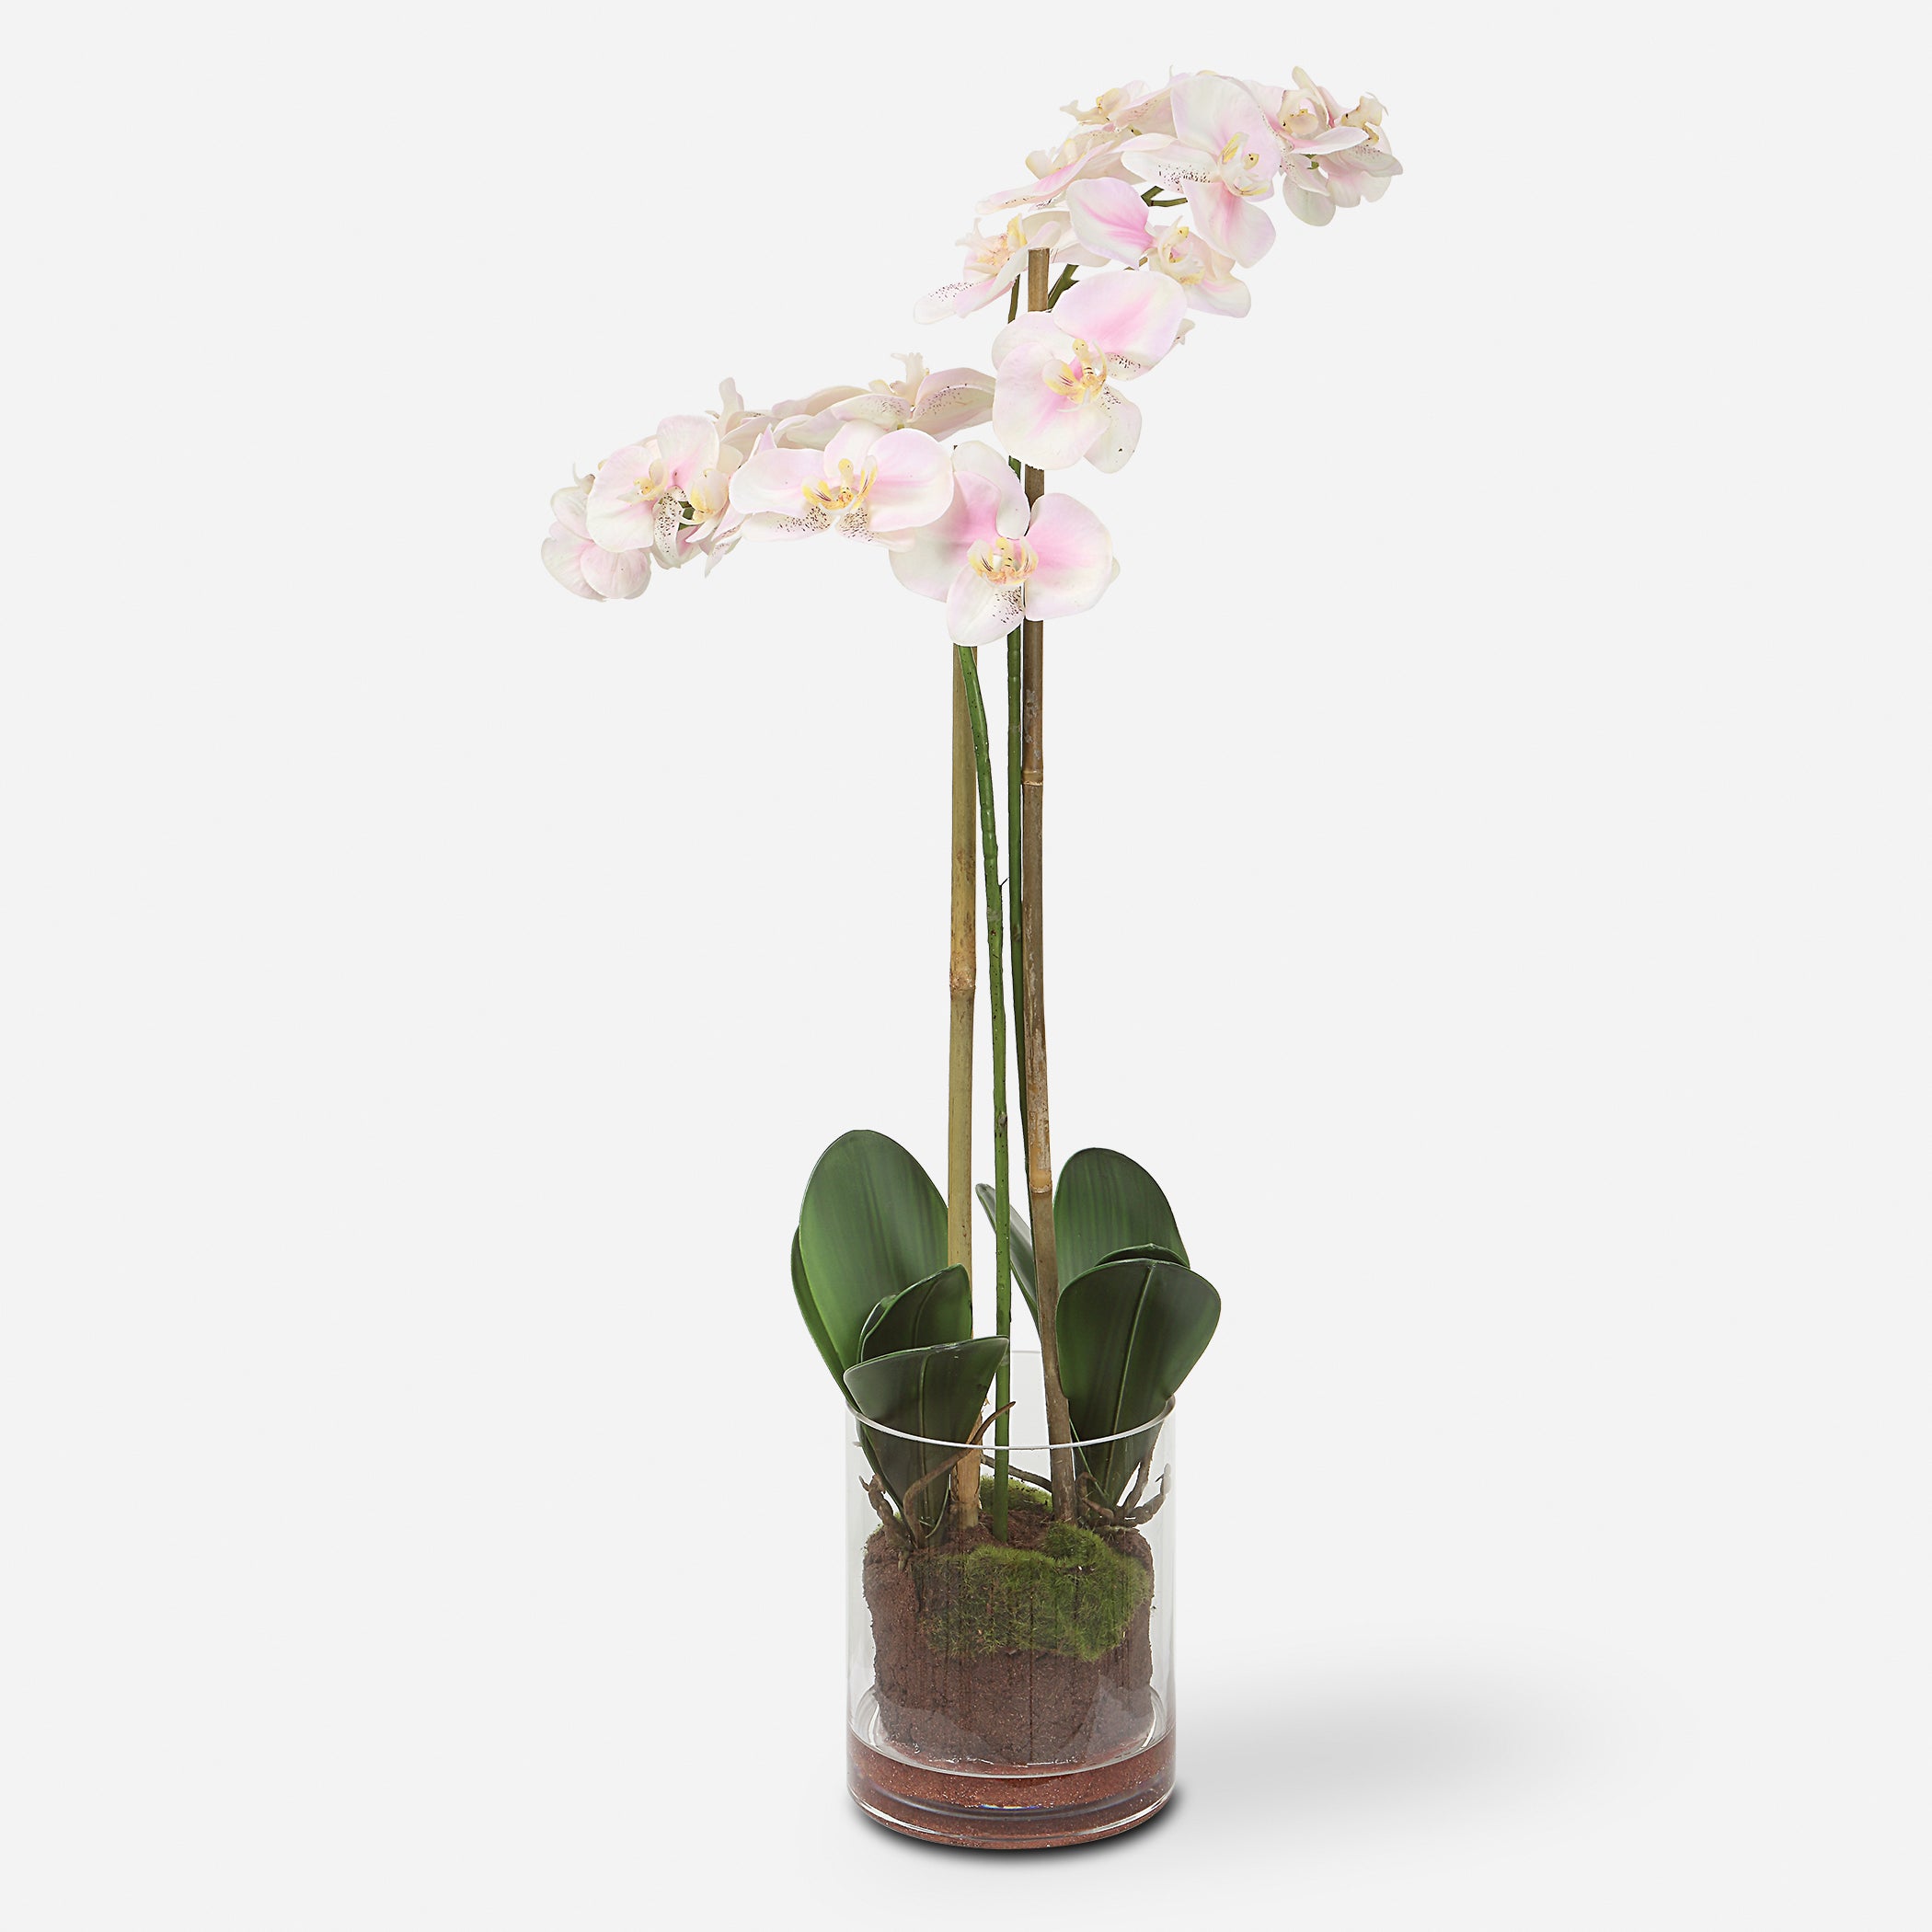 Uttermost Blush Orchid Artificial Flowers / Centerpiece